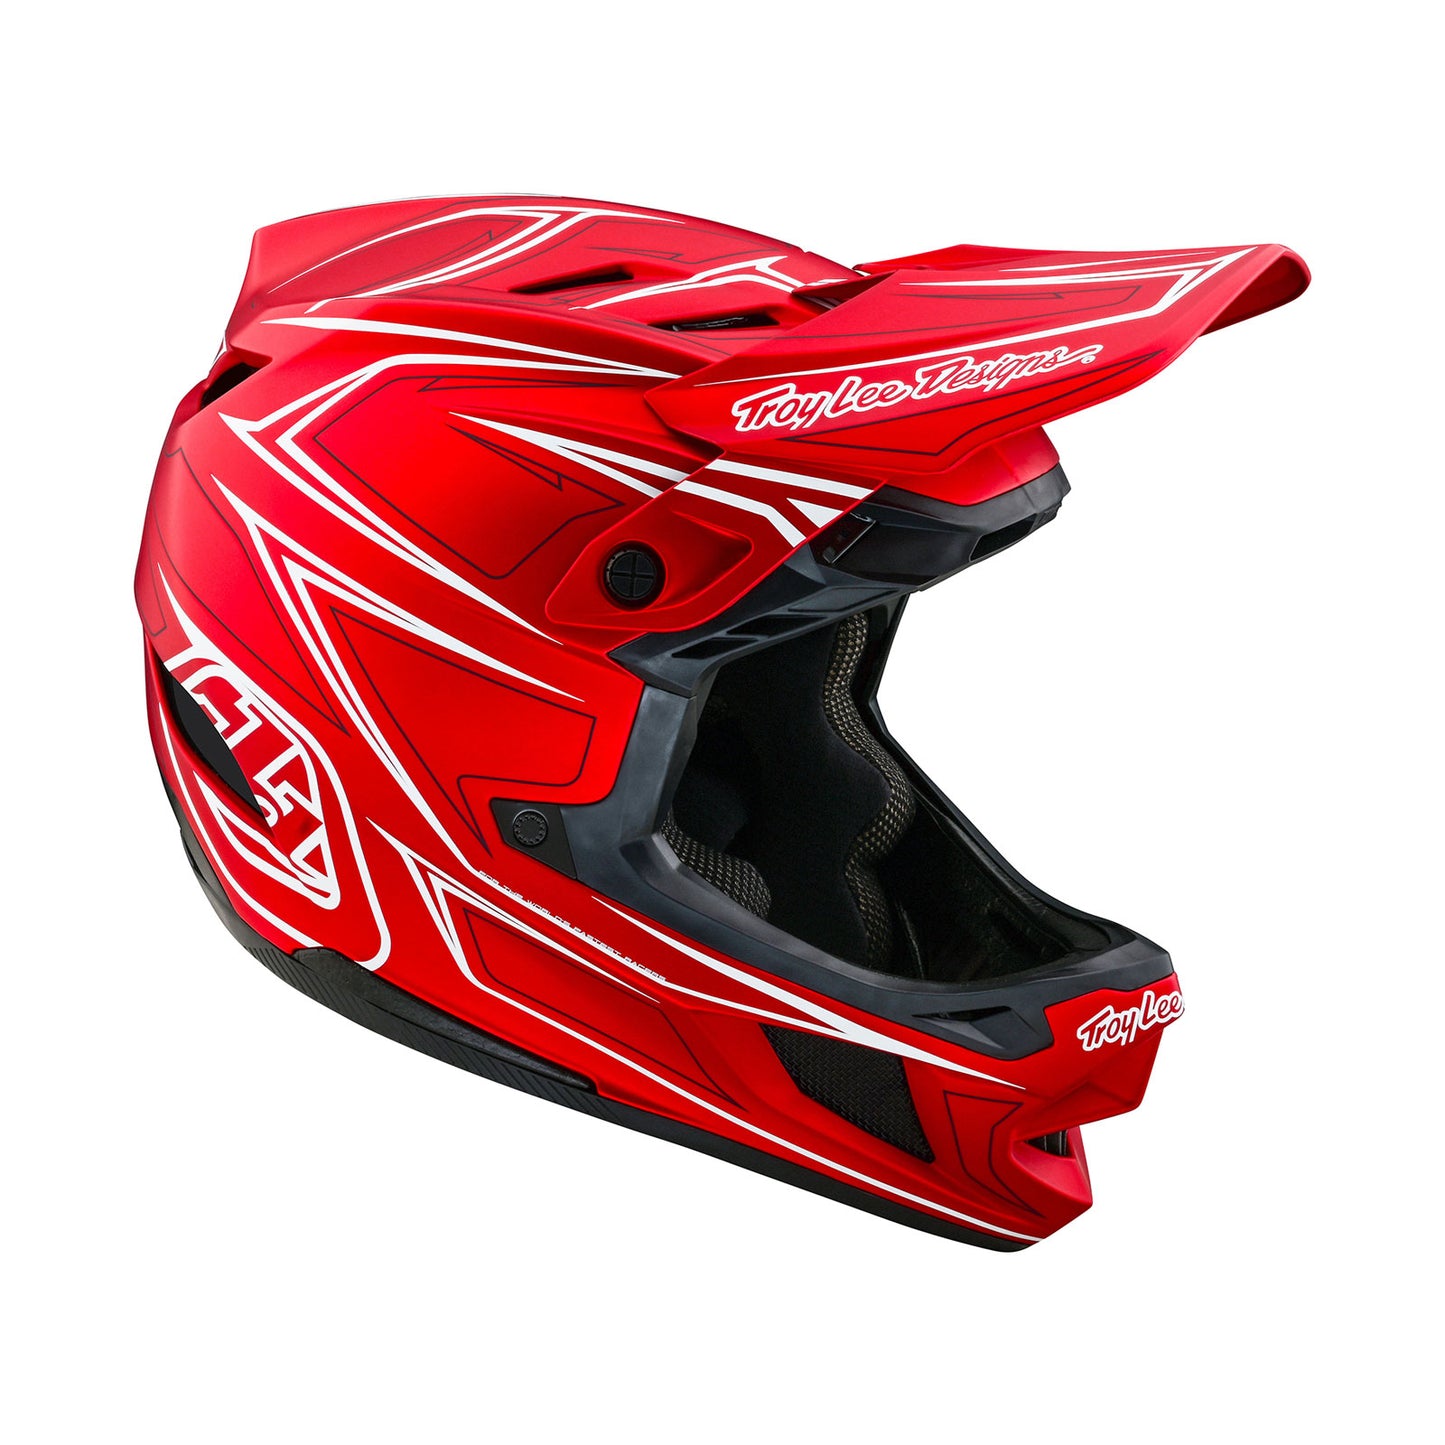 D4 Composite Helmet Pinned Red